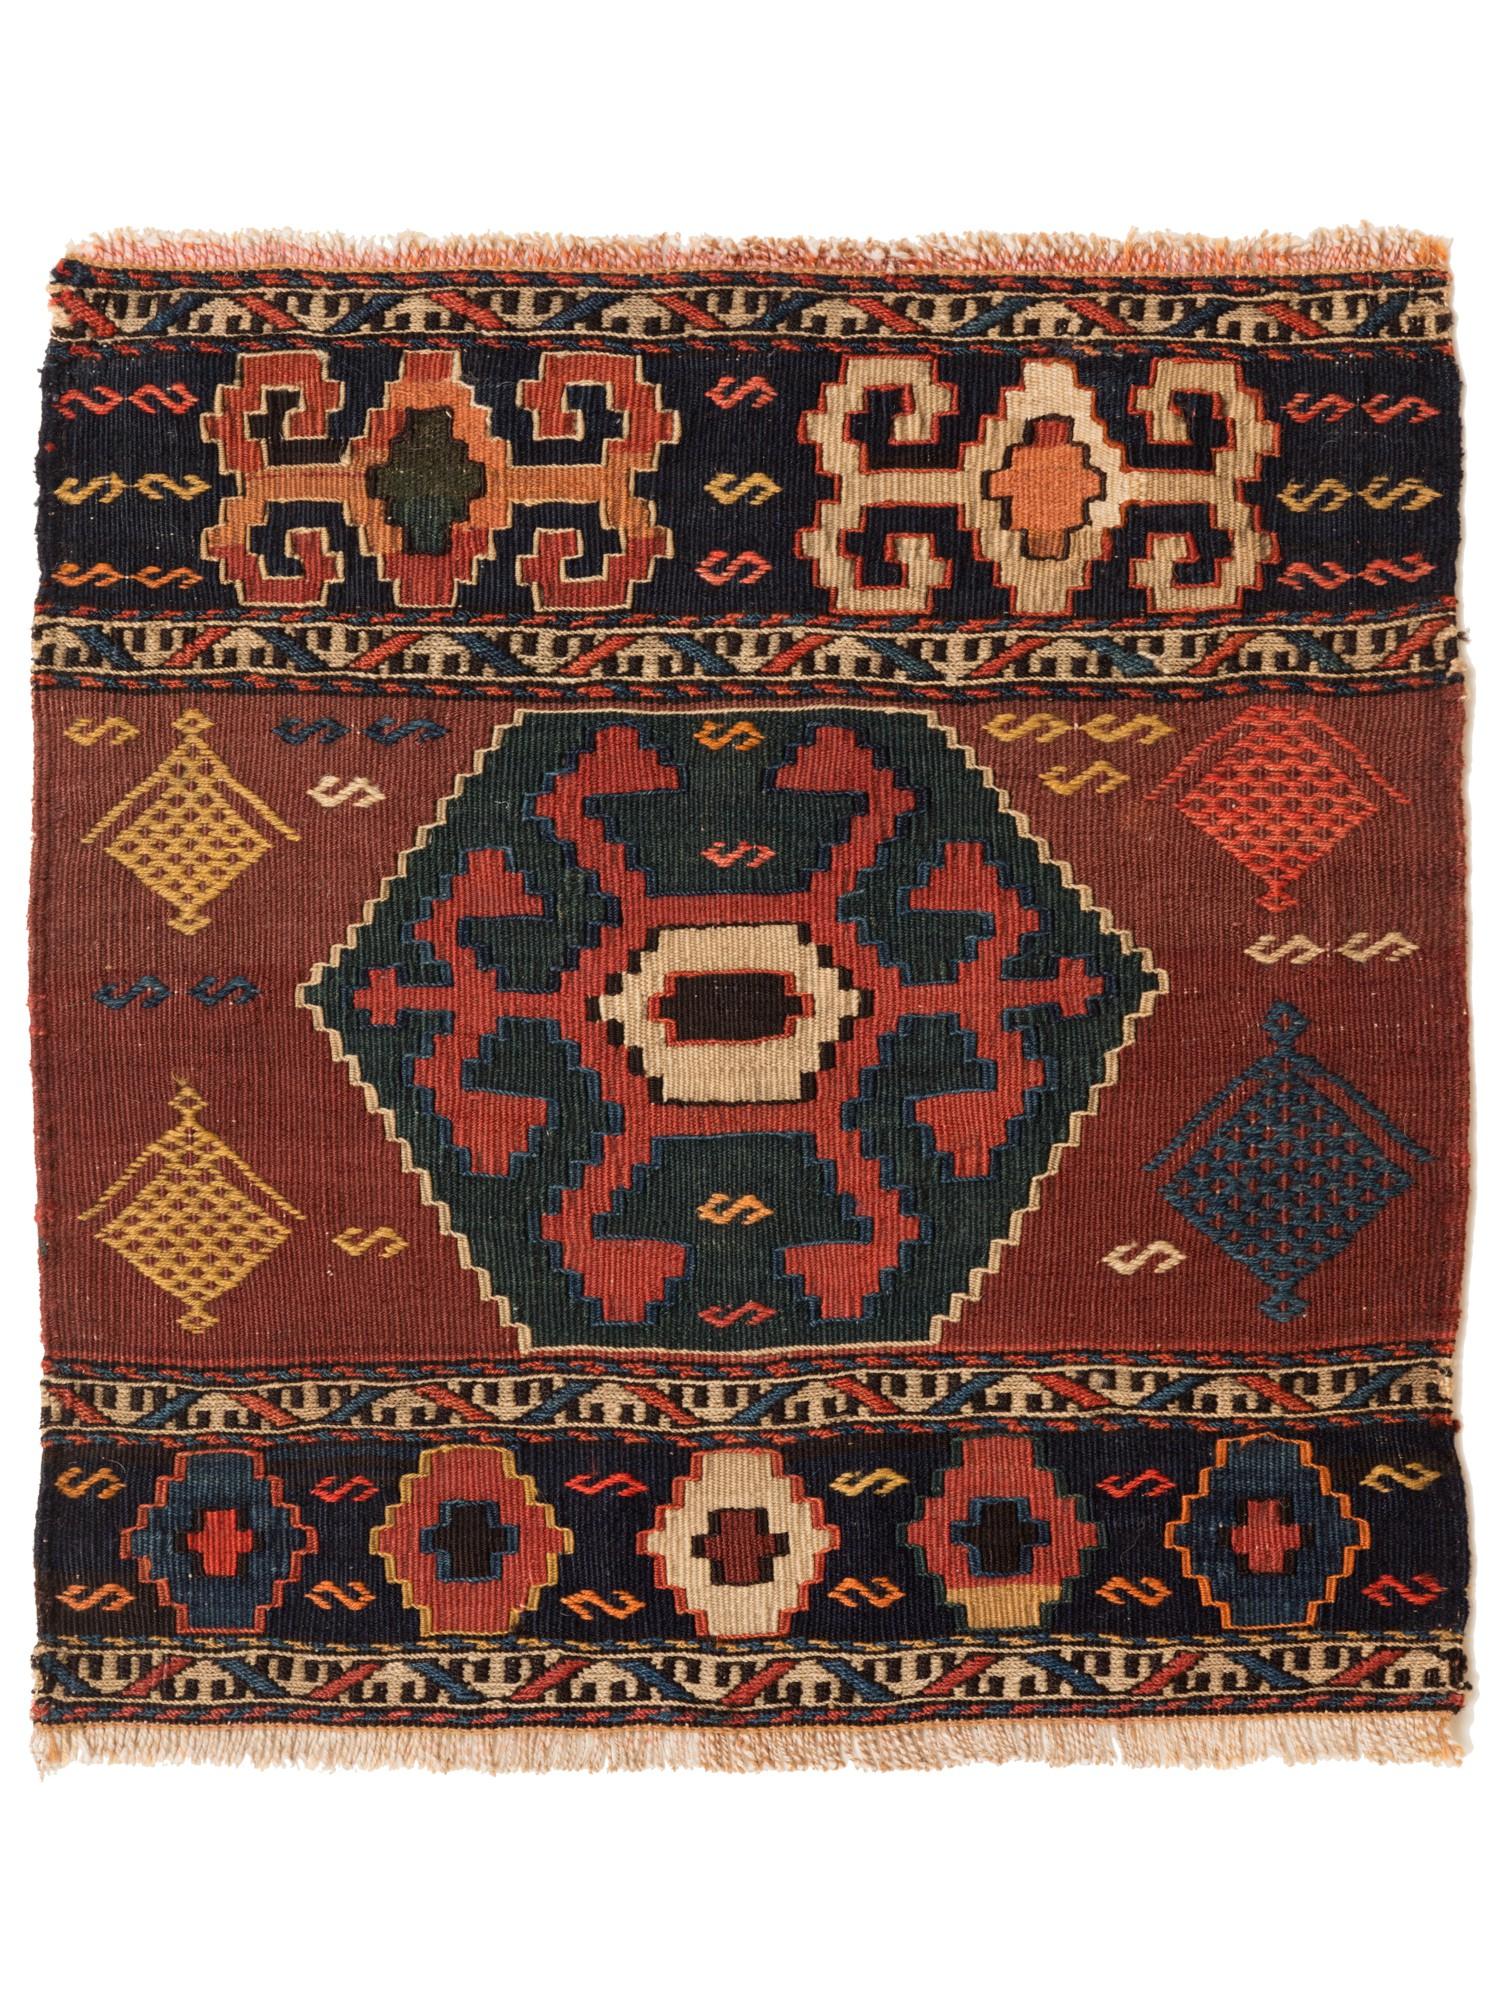 Die Quelle des Teppichs stammt aus dem Buch Islamic Carpets, Joseph V. McMullan, Near Eastern Art Research Center Inc. 1965, New York, Nr. 28. Das Feld des so genannten 